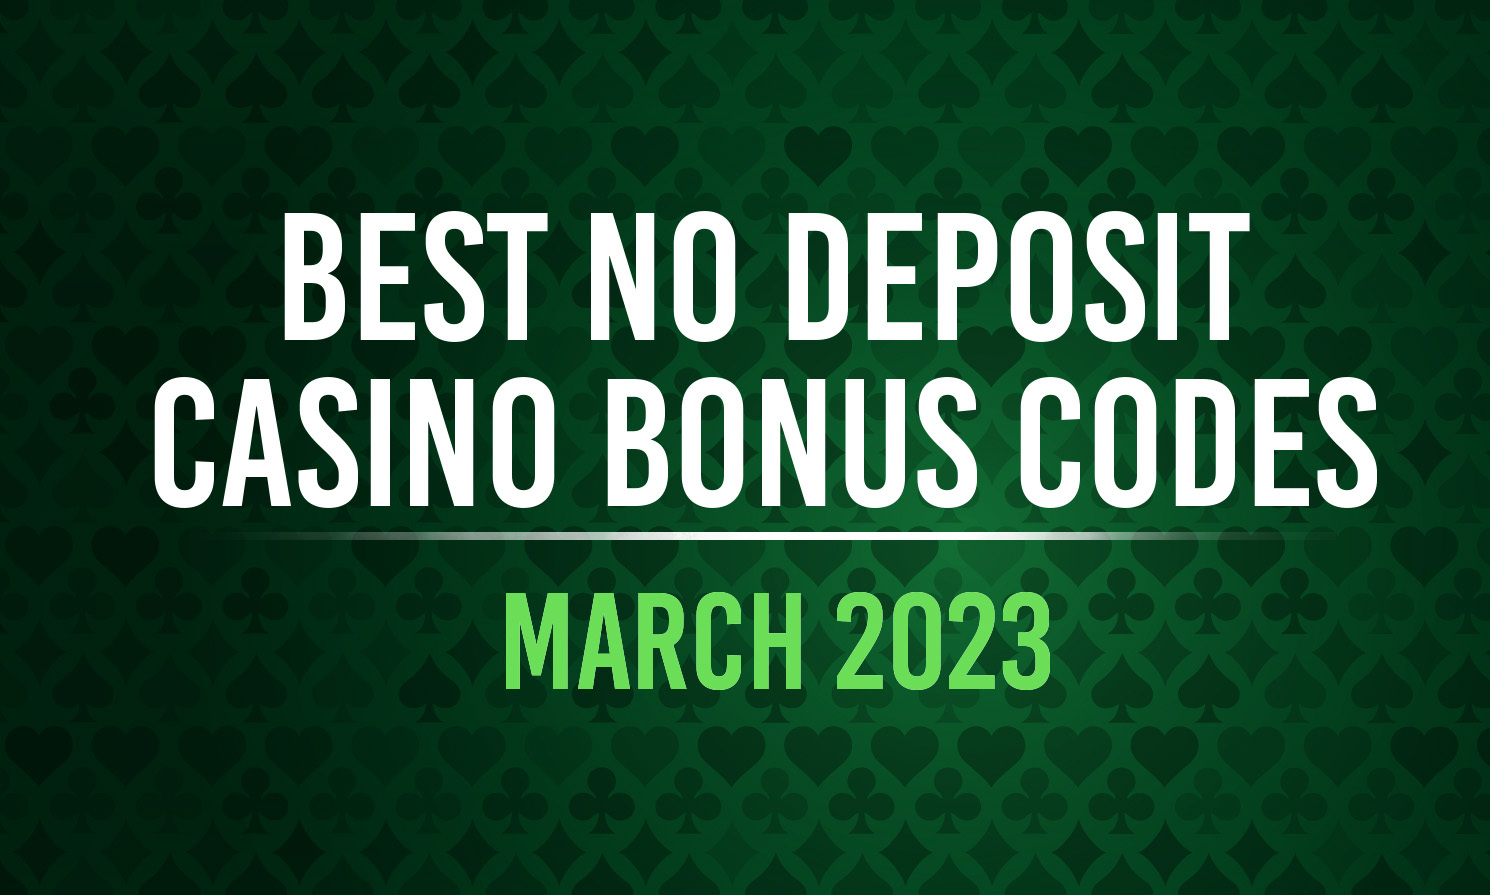 South Africa's Best No Deposit Casino Bonuses 